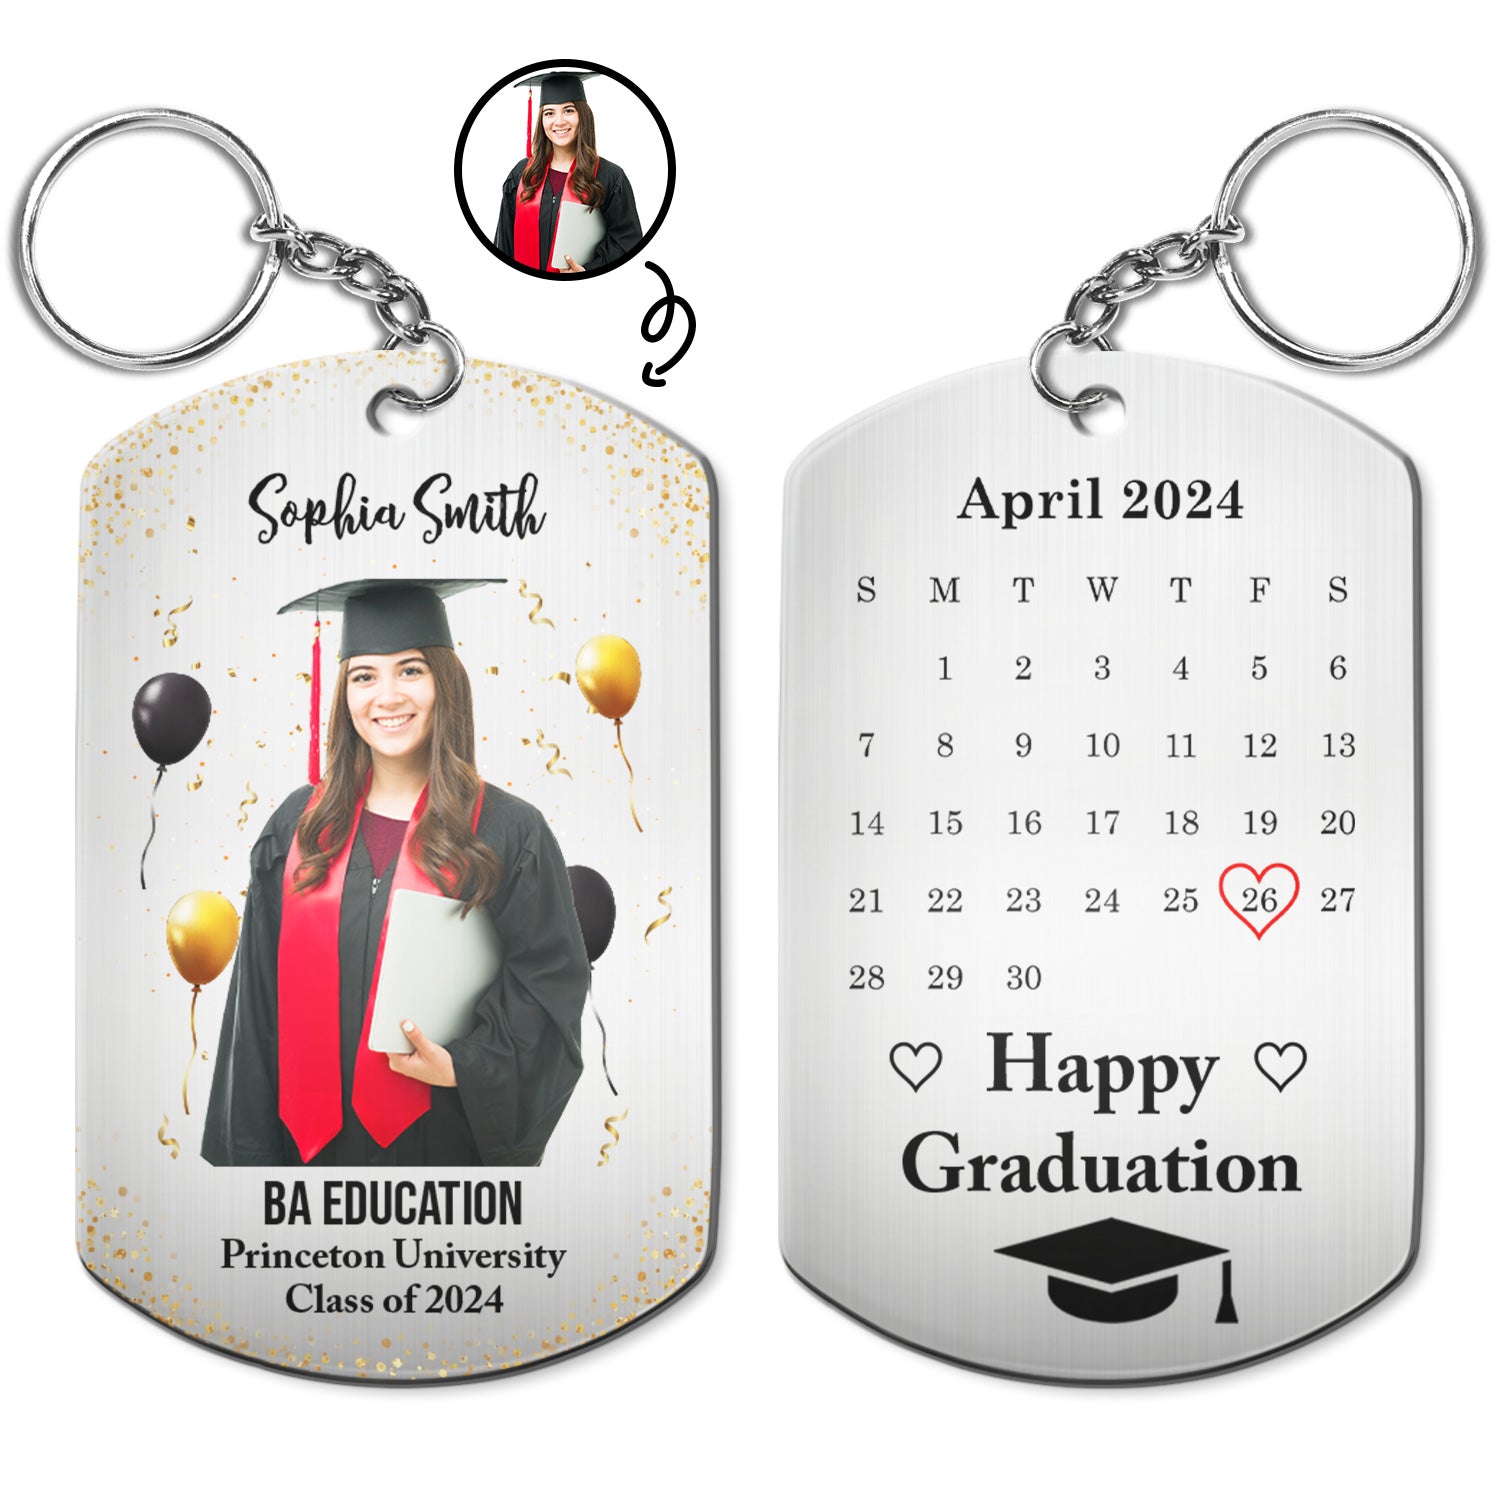 Custom Photo Happy Graduation - Graduation Gift For Friends, Family - Personalized Aluminum Keychain